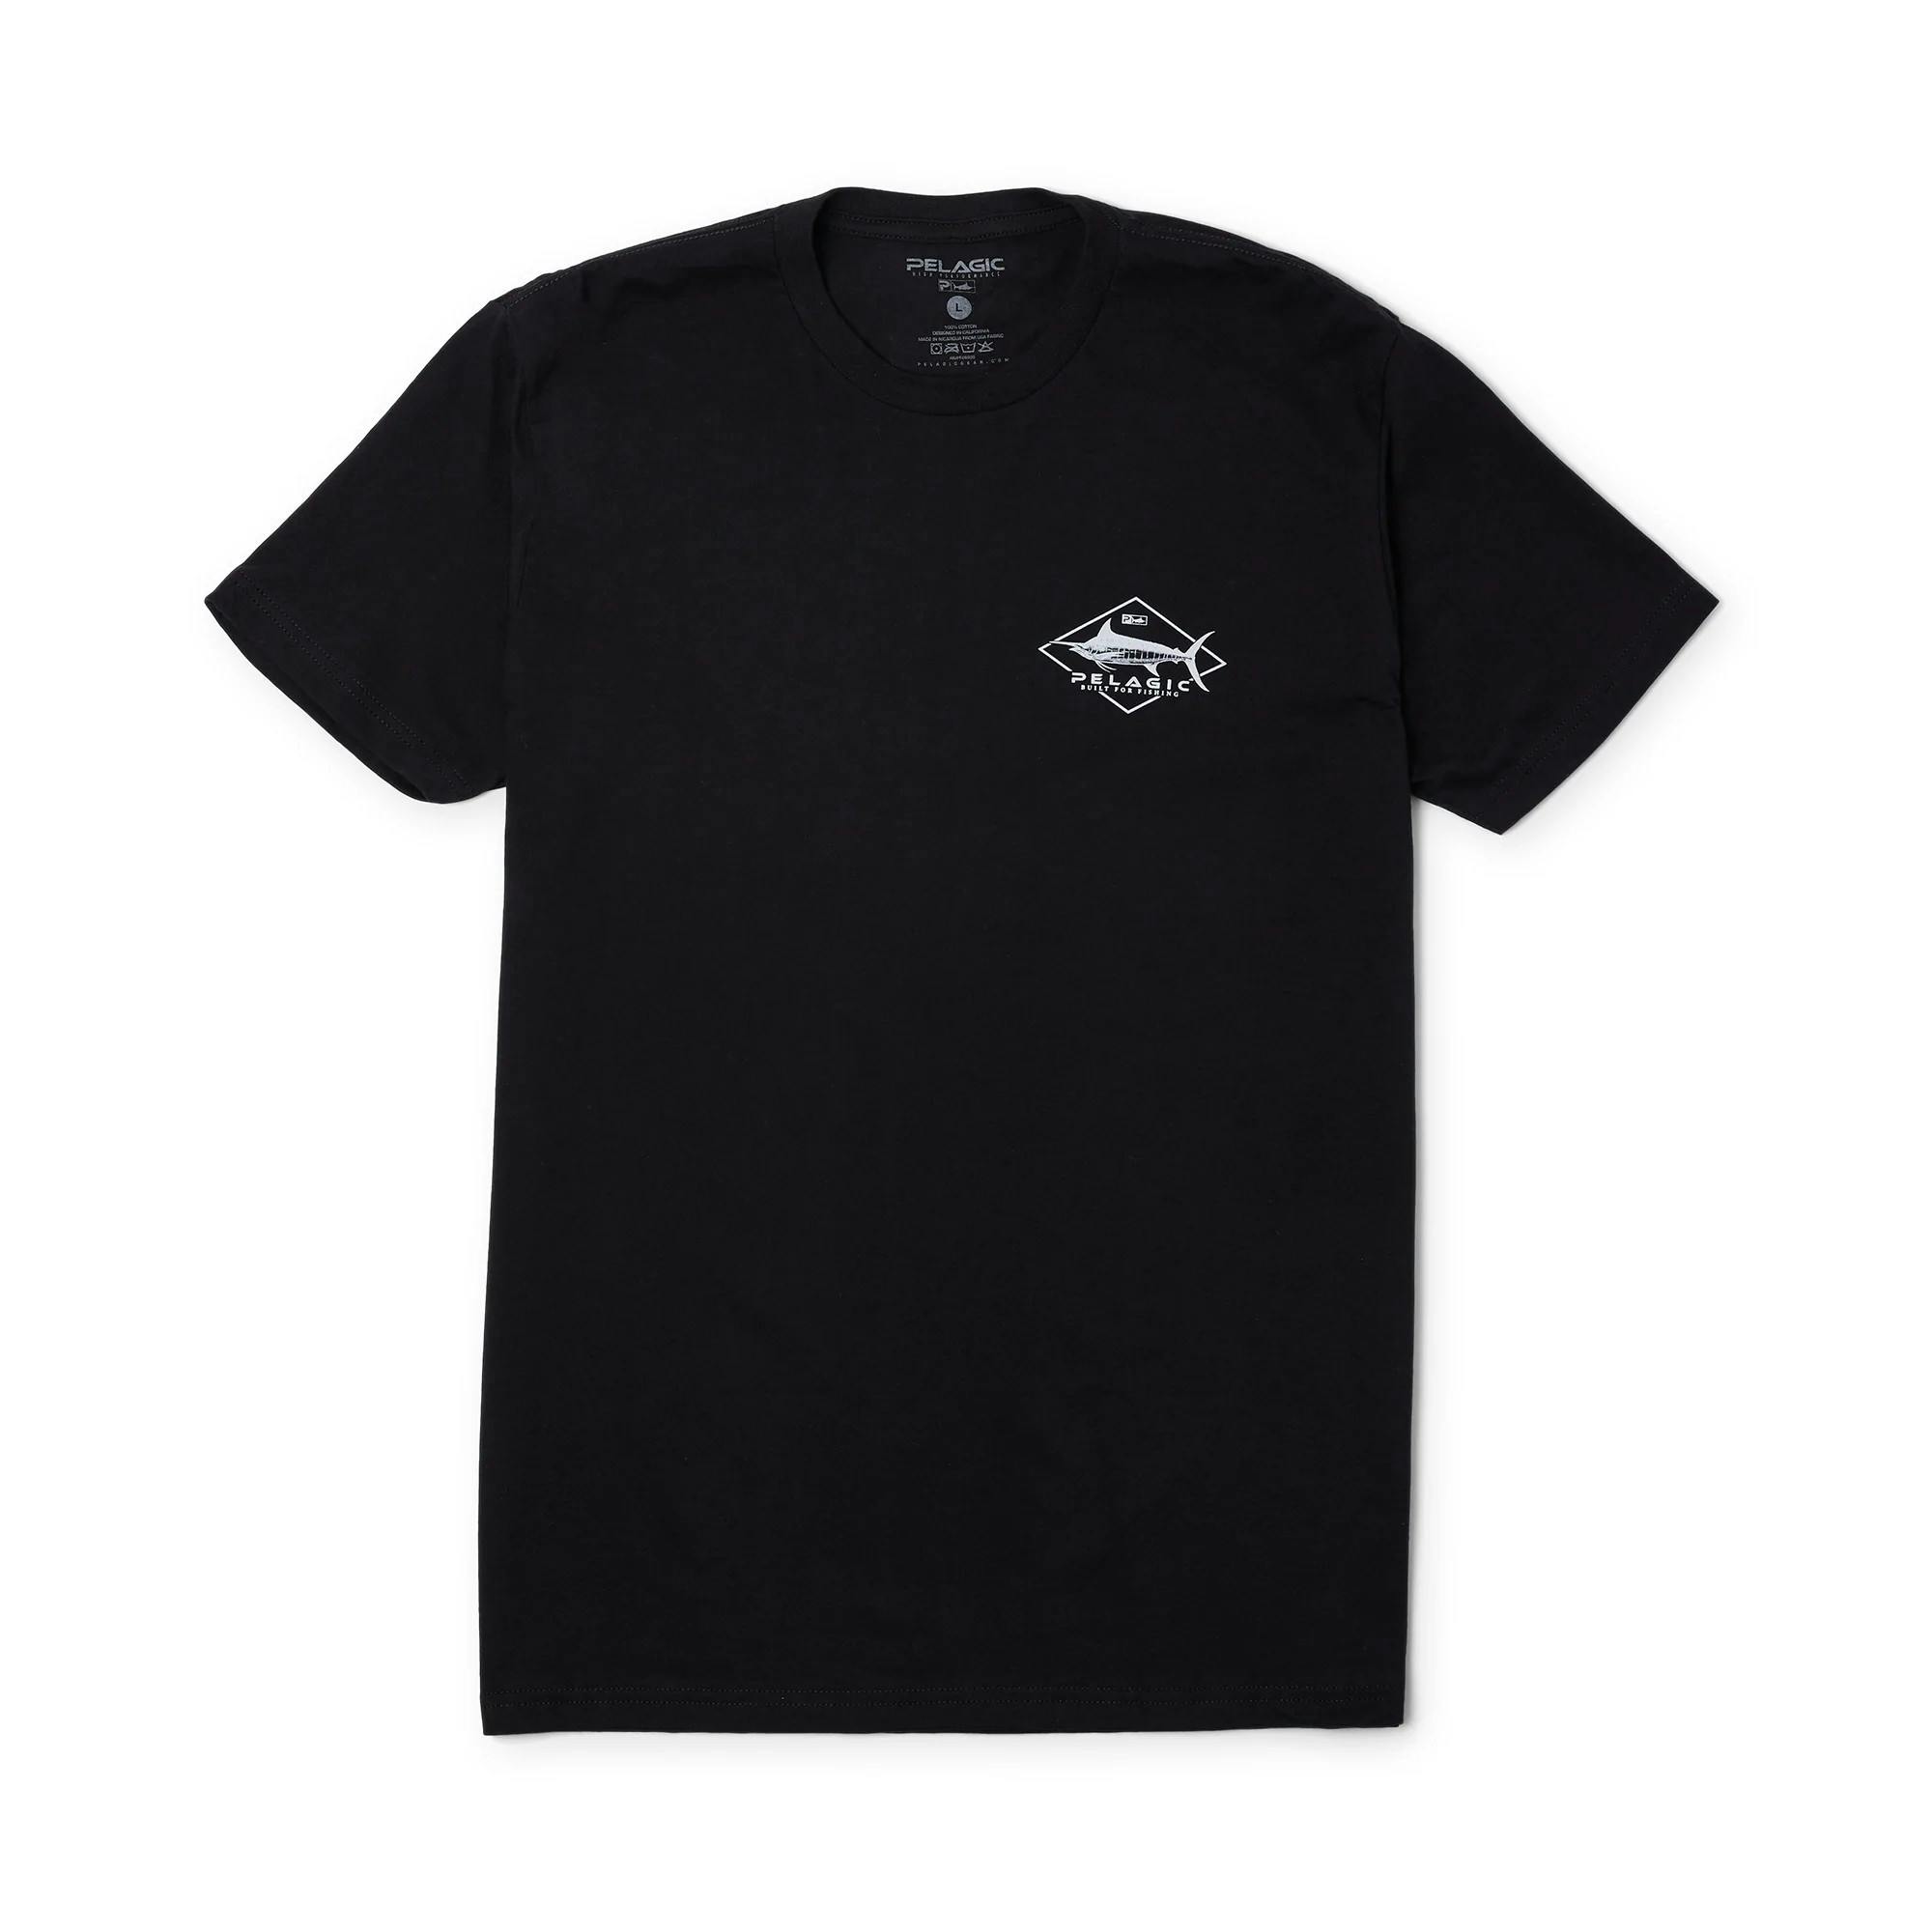 Pelagic Heavy Gear Premium Fishing T-Shirt Front - Black